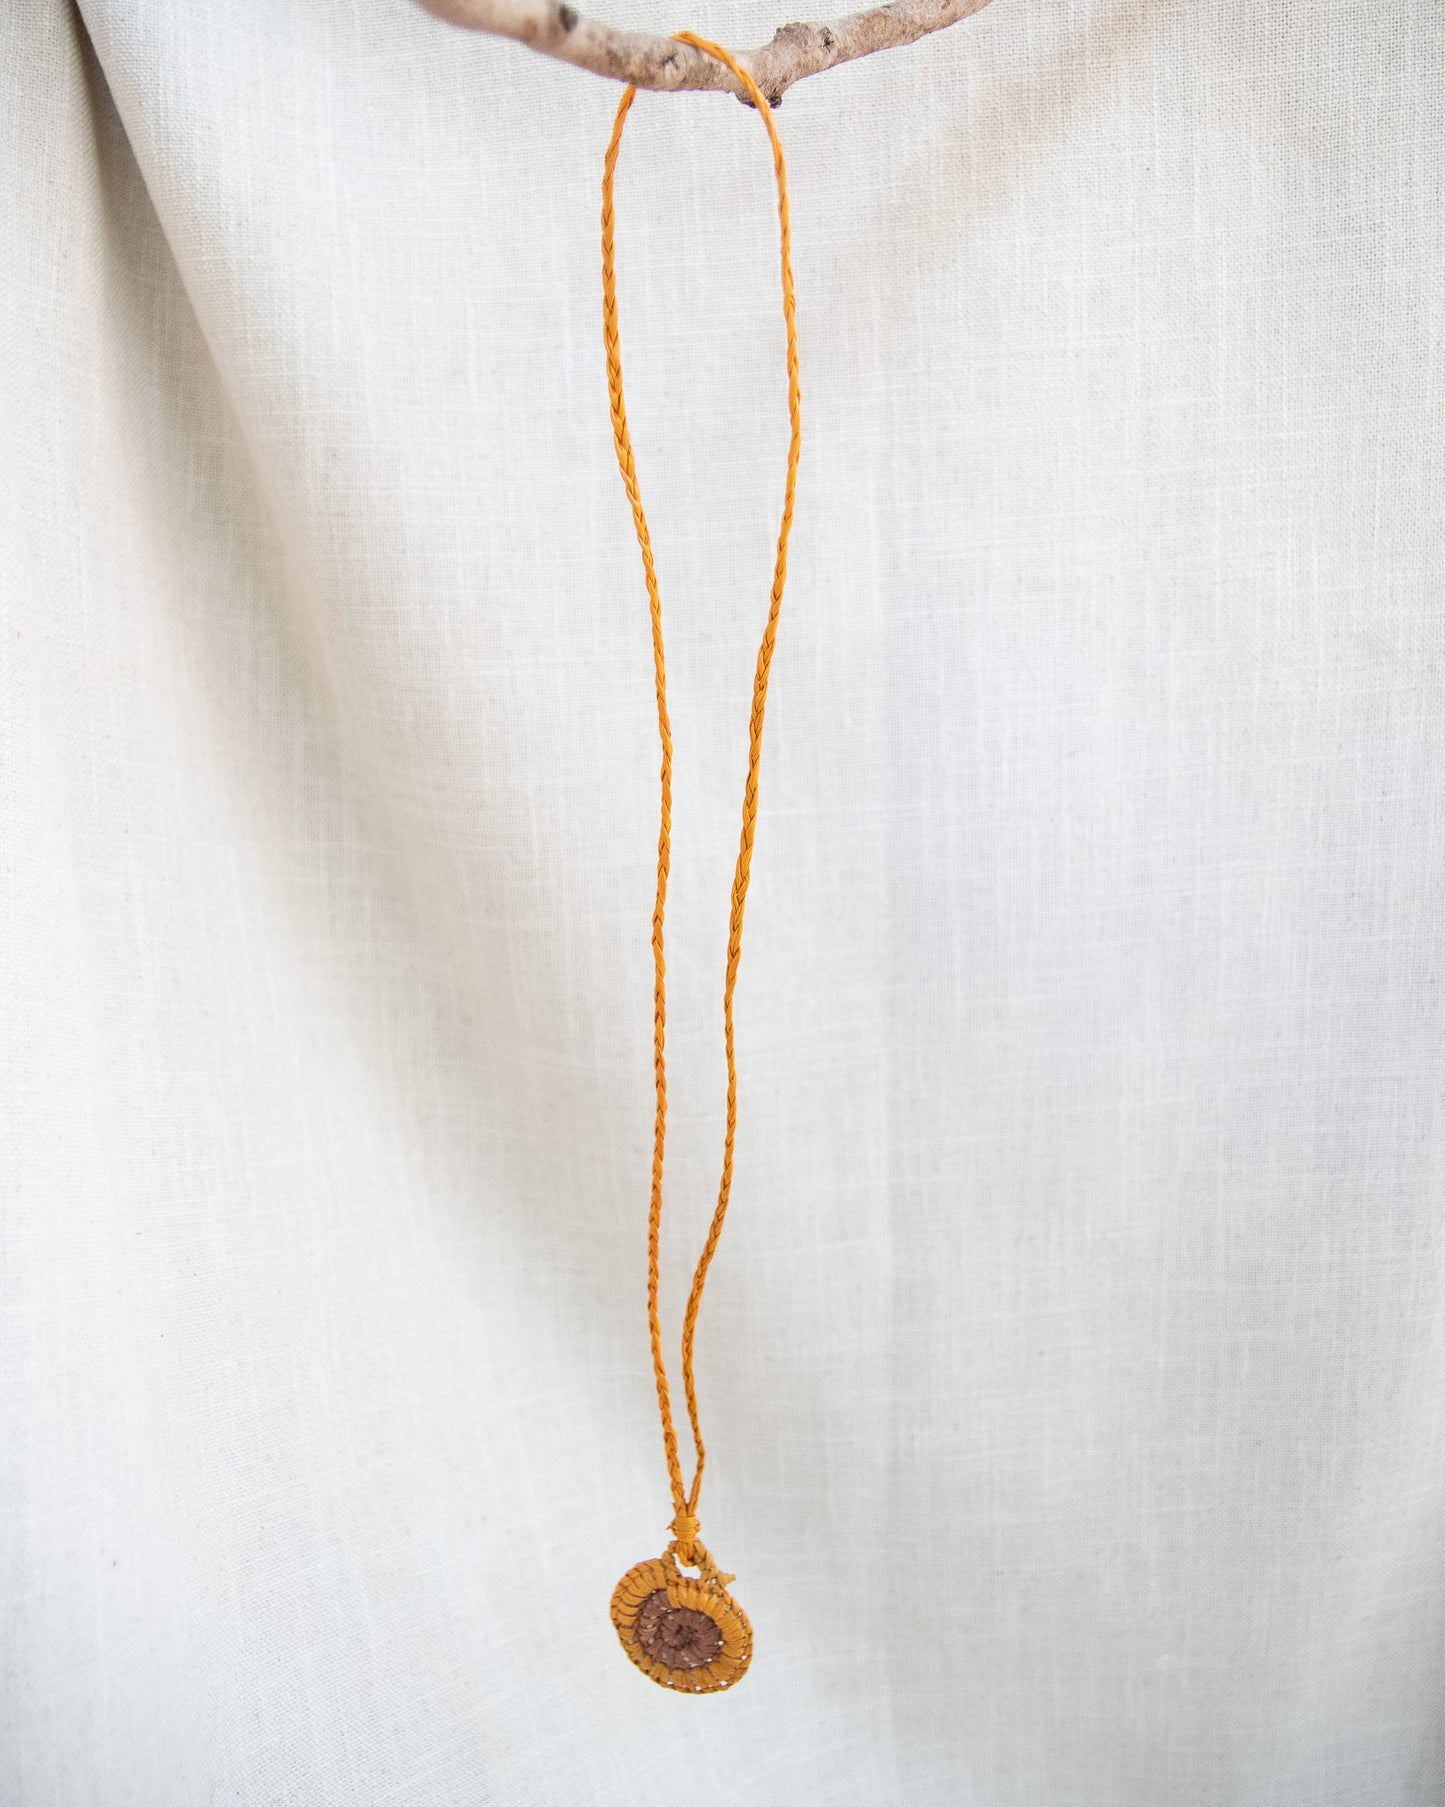 Woven womens necklace by Gwenyth Manakgu